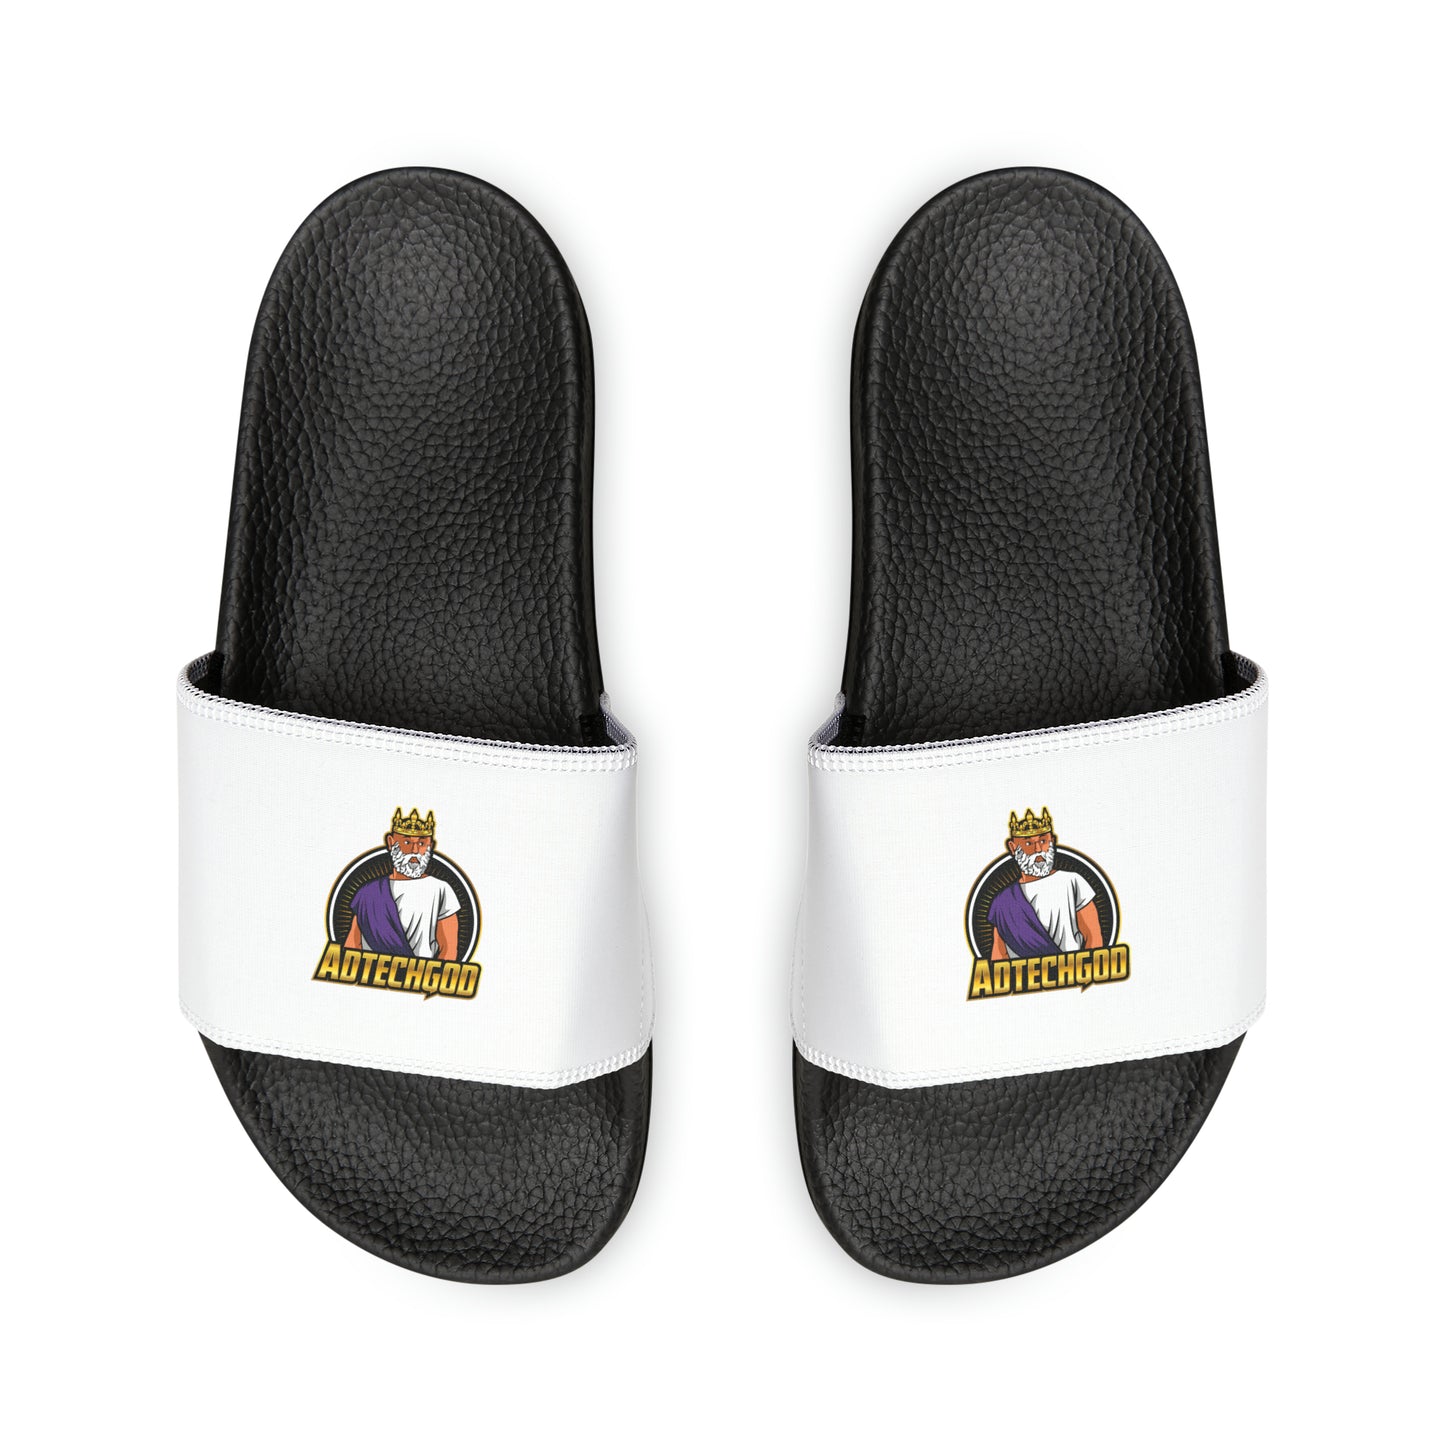 AdTechGod Women's PU Slide Sandals